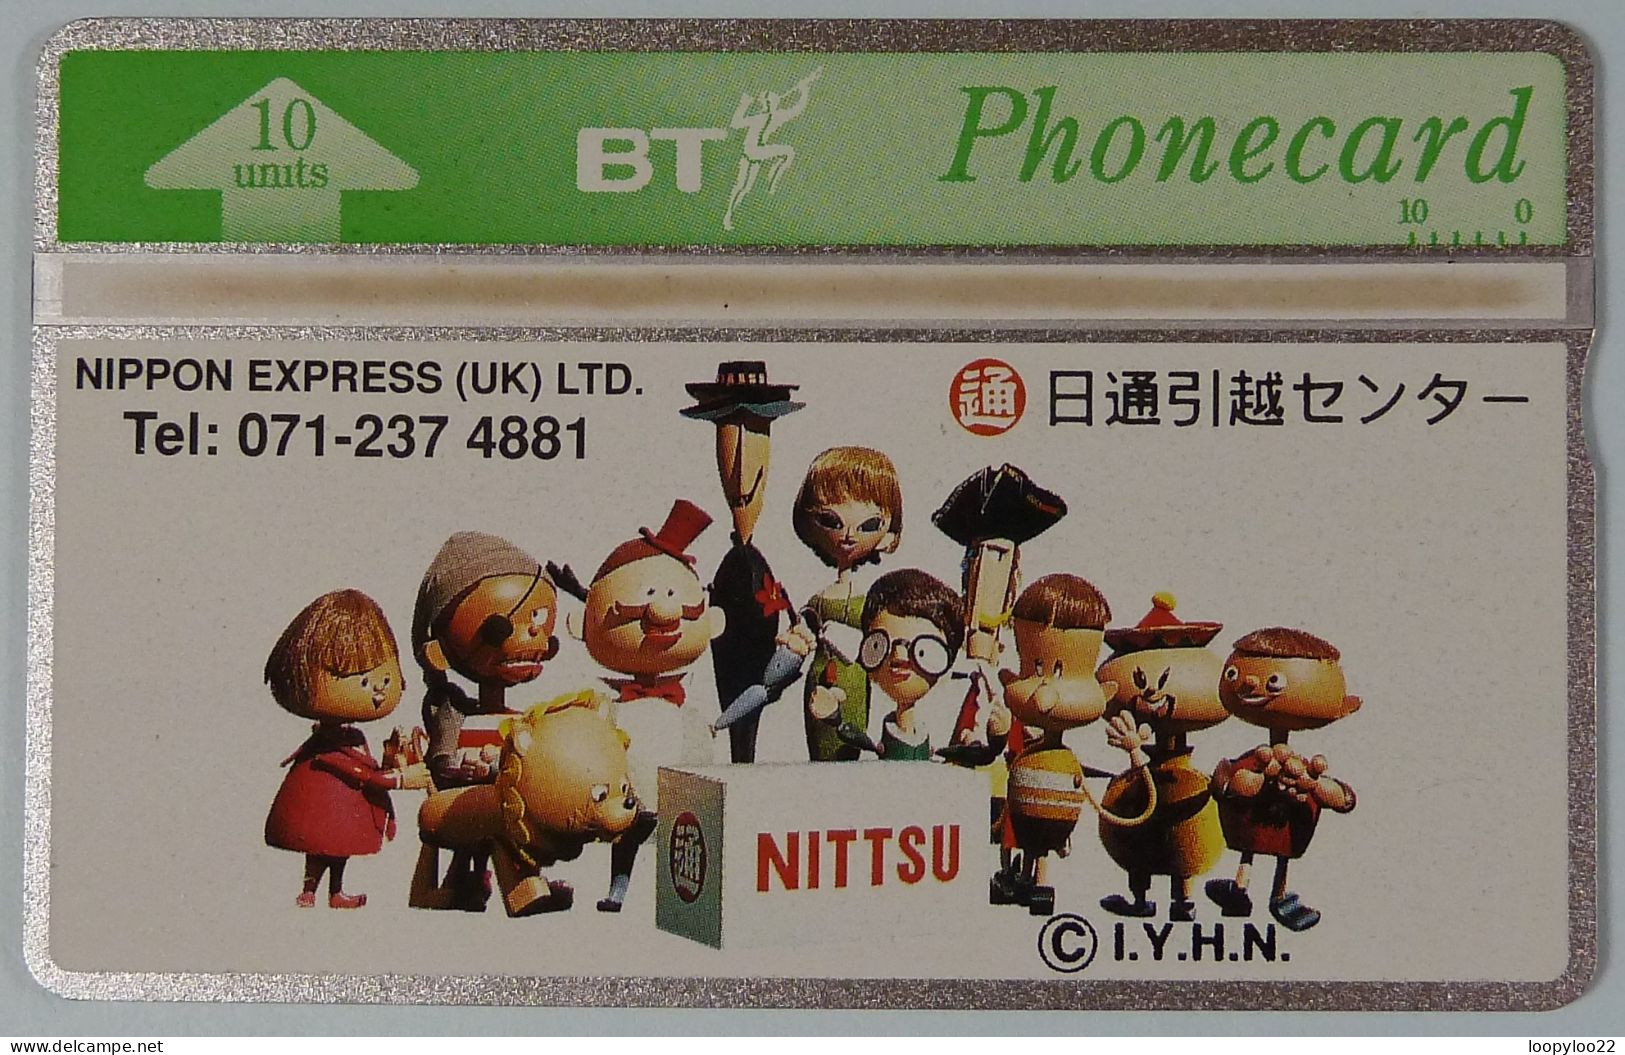 UK - Great Britain - BT & Landis & Gyr - BTP208 - Nippon Express NITTSU - 332L - %5000ex - Mint - BT Private Issues